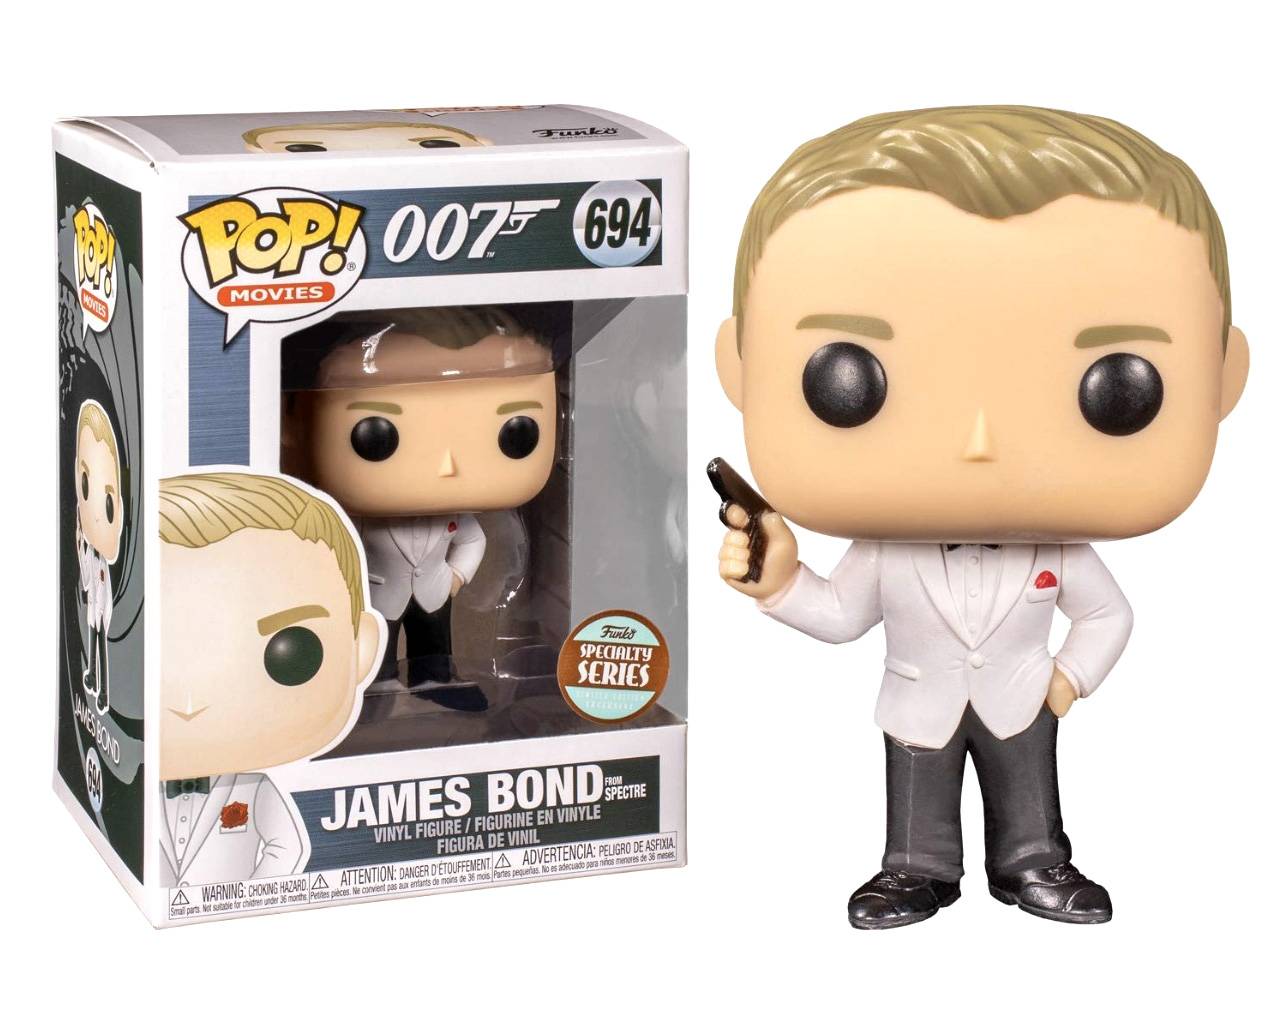 James Bond from Spectre (Specialty Series) Pop! Vinyl